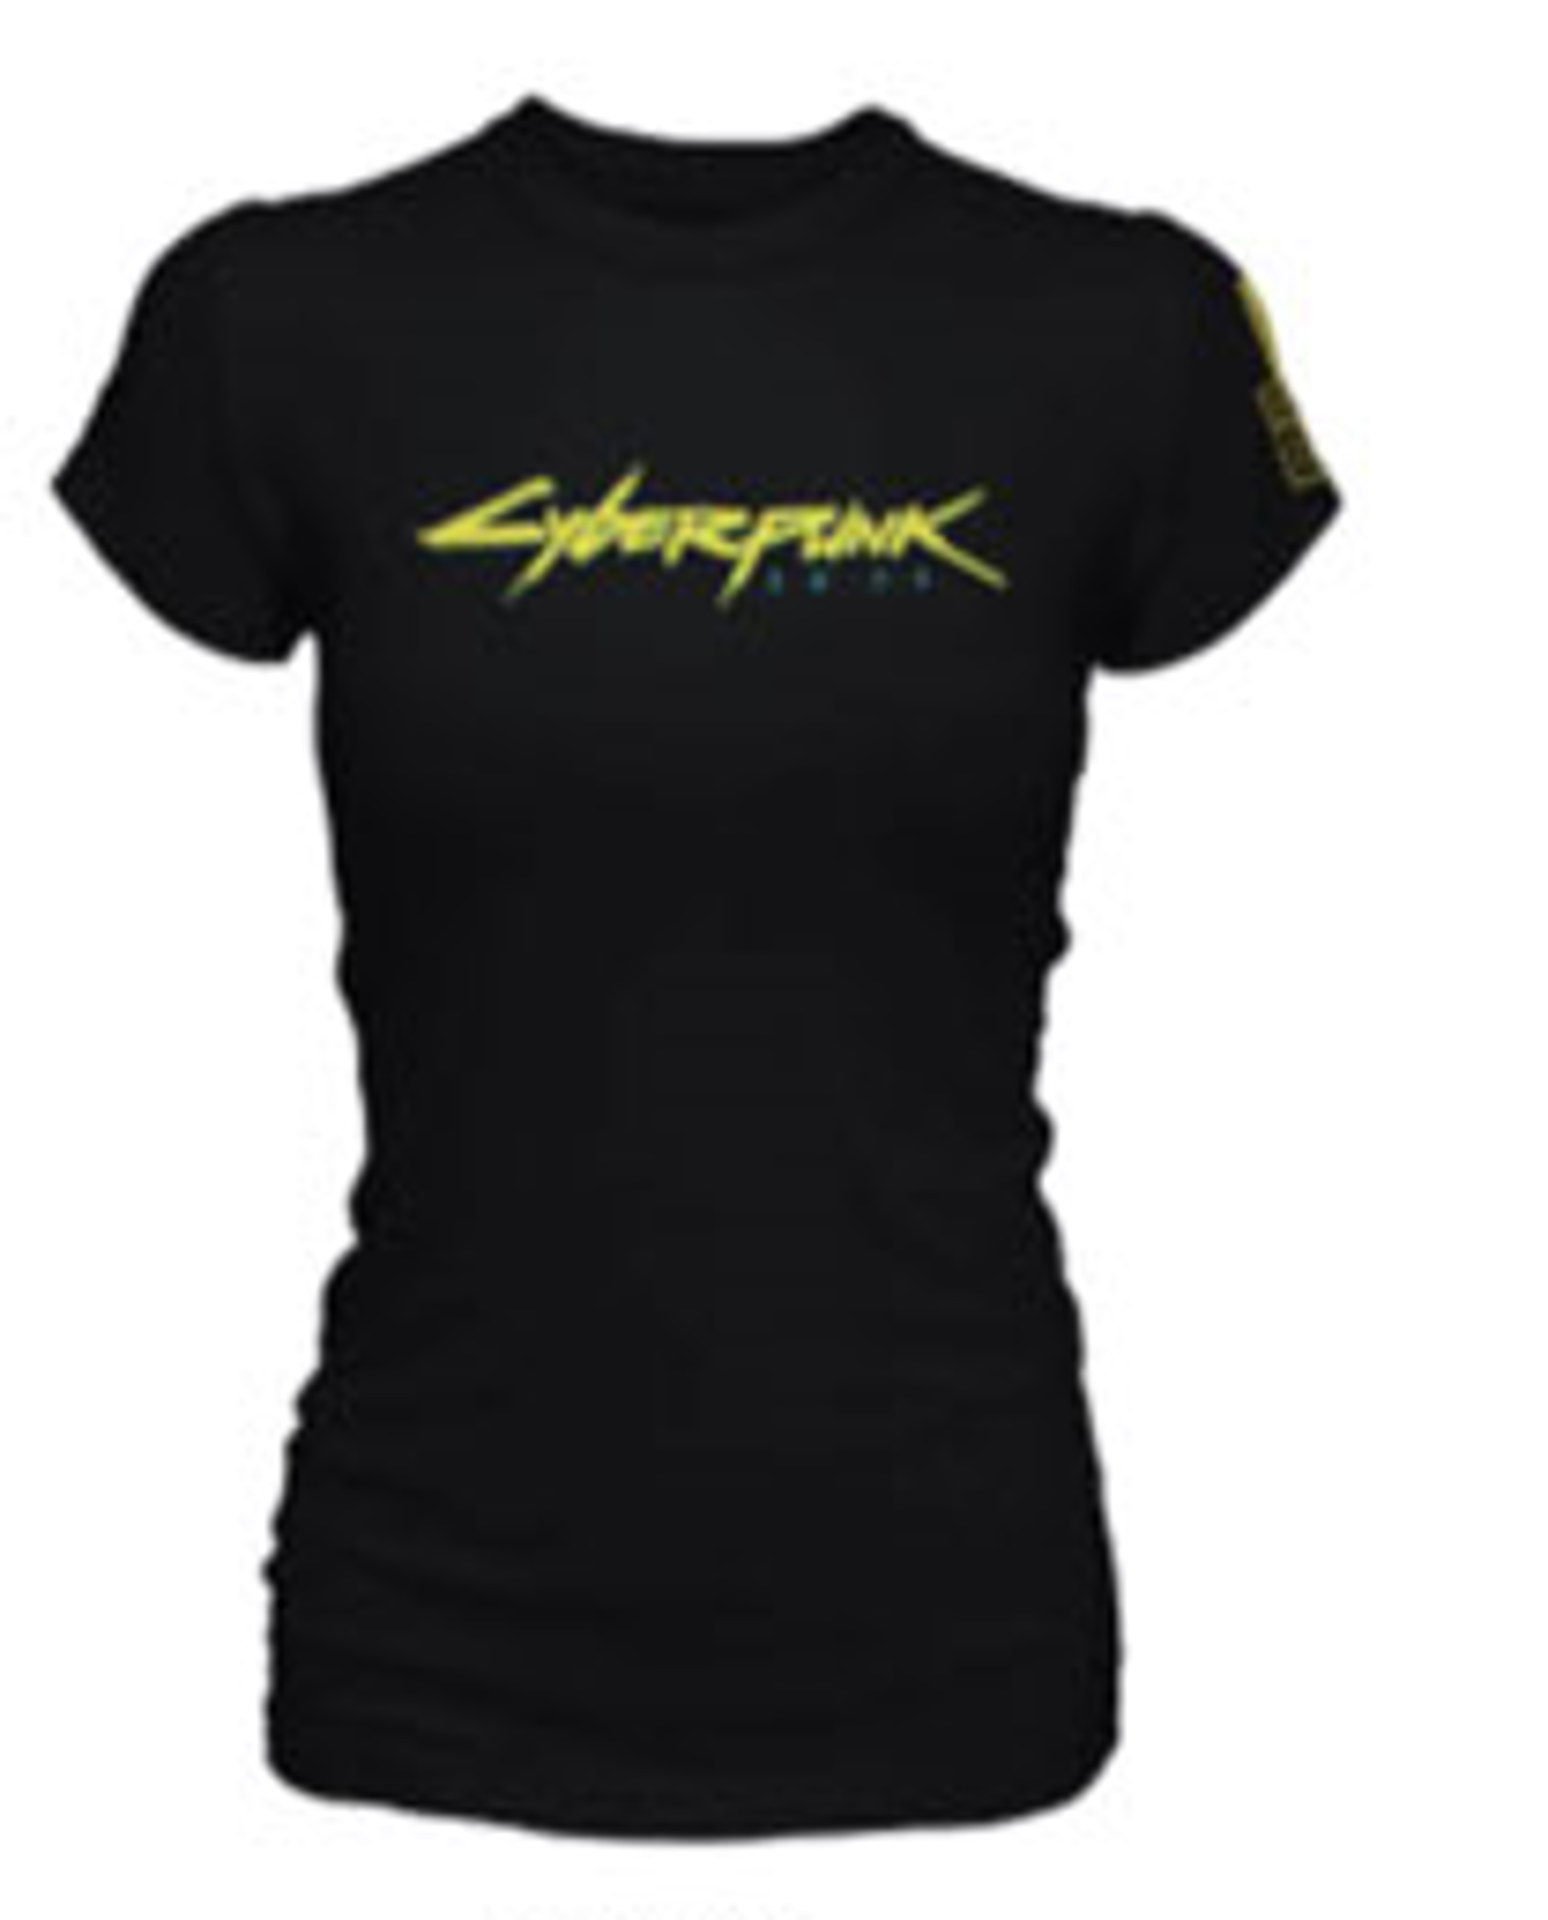 Cyberpunk 2077 - Logo Black Woman T-Shirt - S